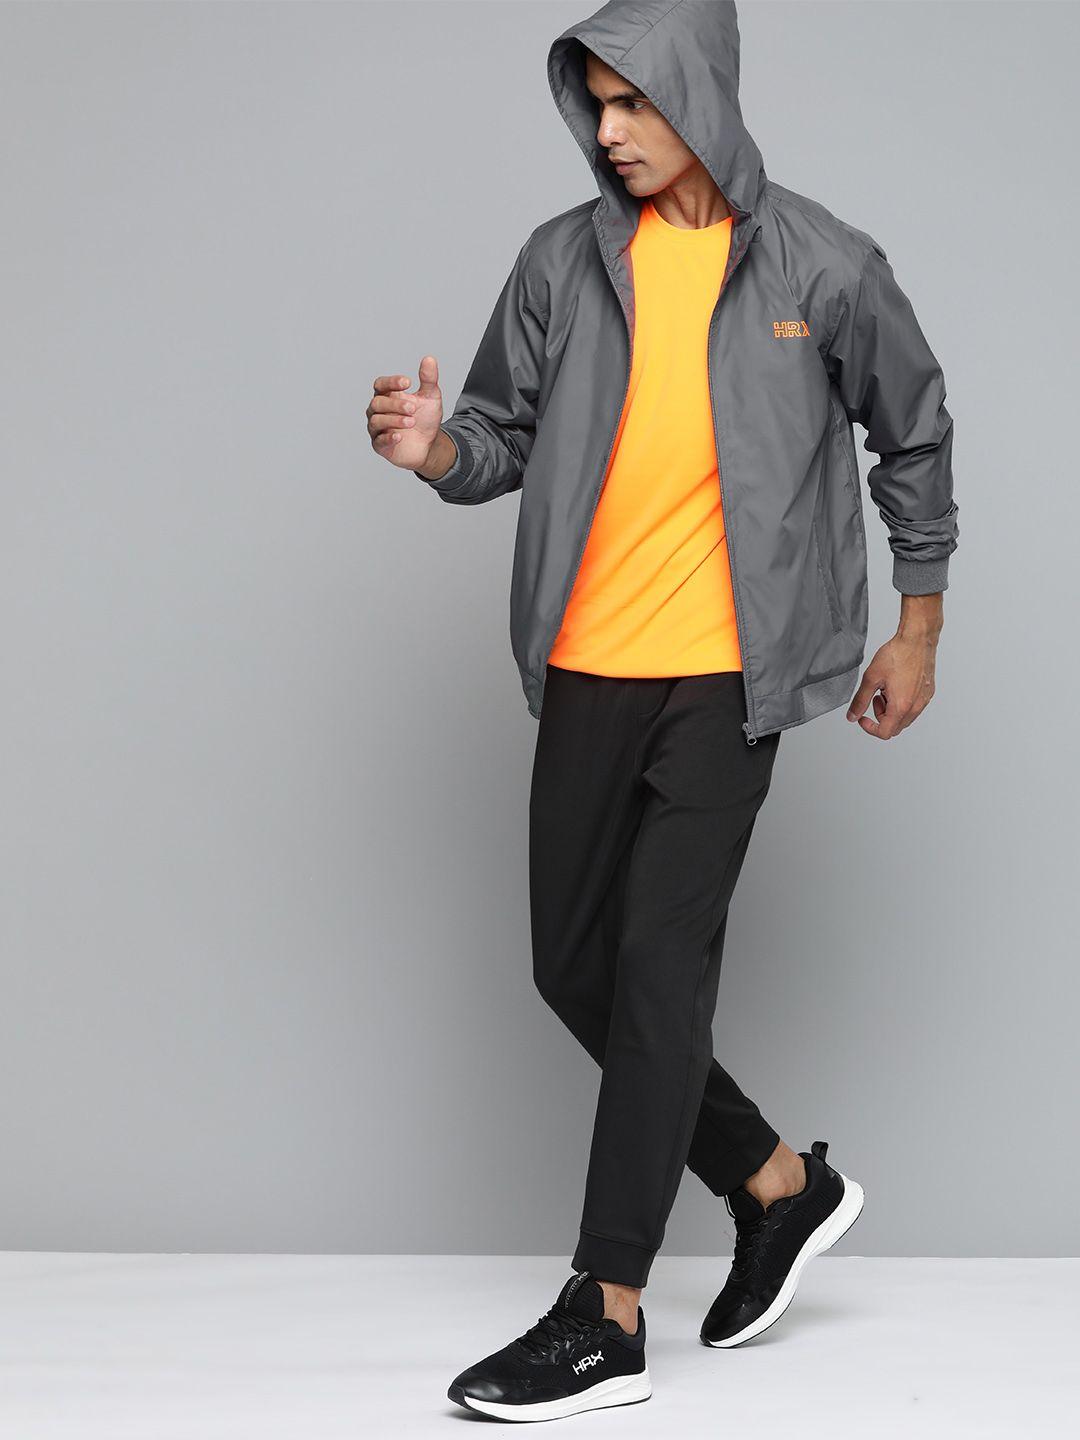 hrx-by-hrithik-roshan-rapid-dry-training-jacket